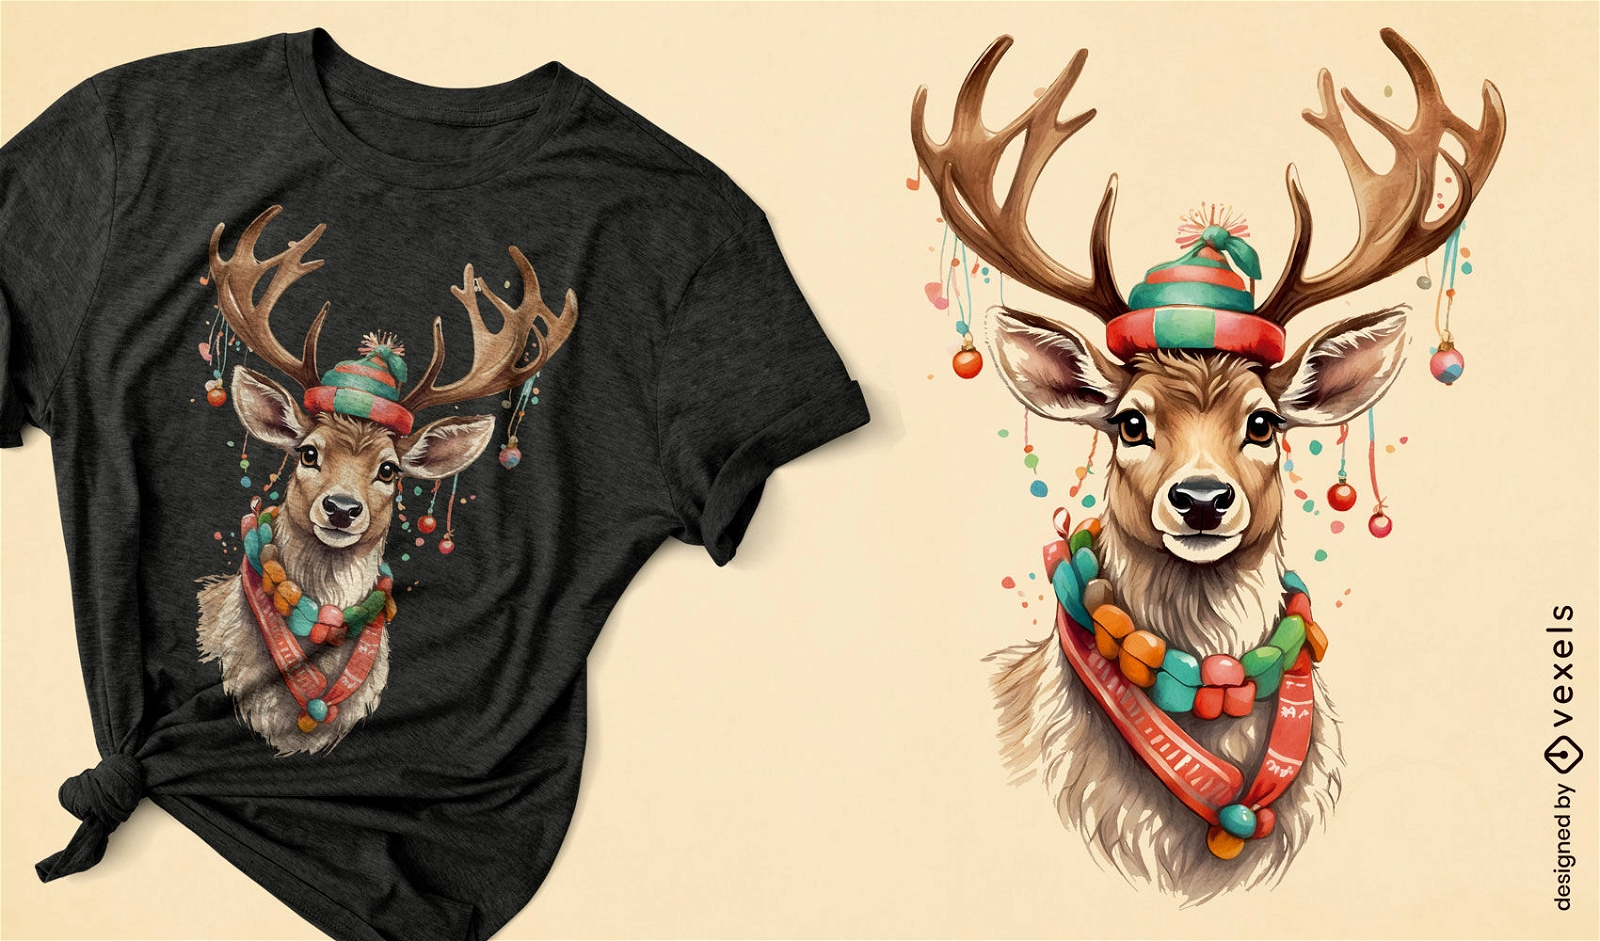 Festive reindeer holiday t-shirt design